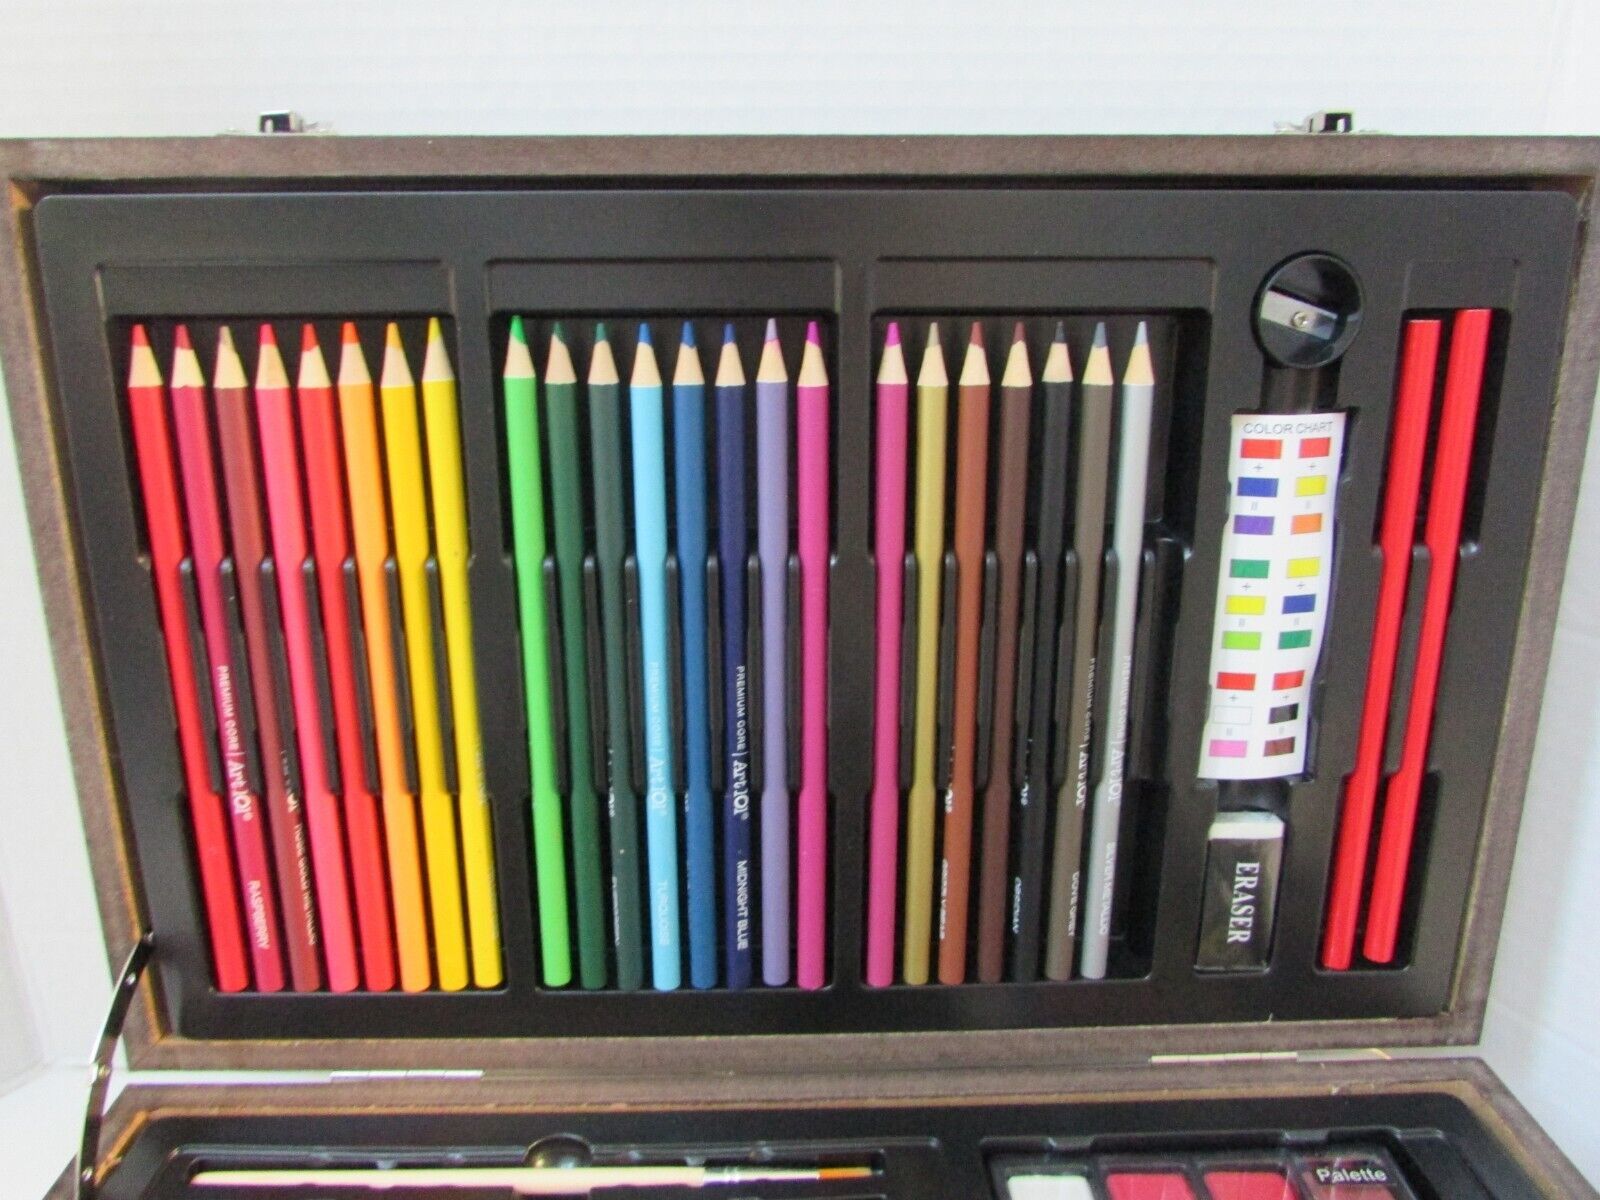 TANMIT Gel Pens, 36 Colors Gel Pens Set for Adult Indonesia